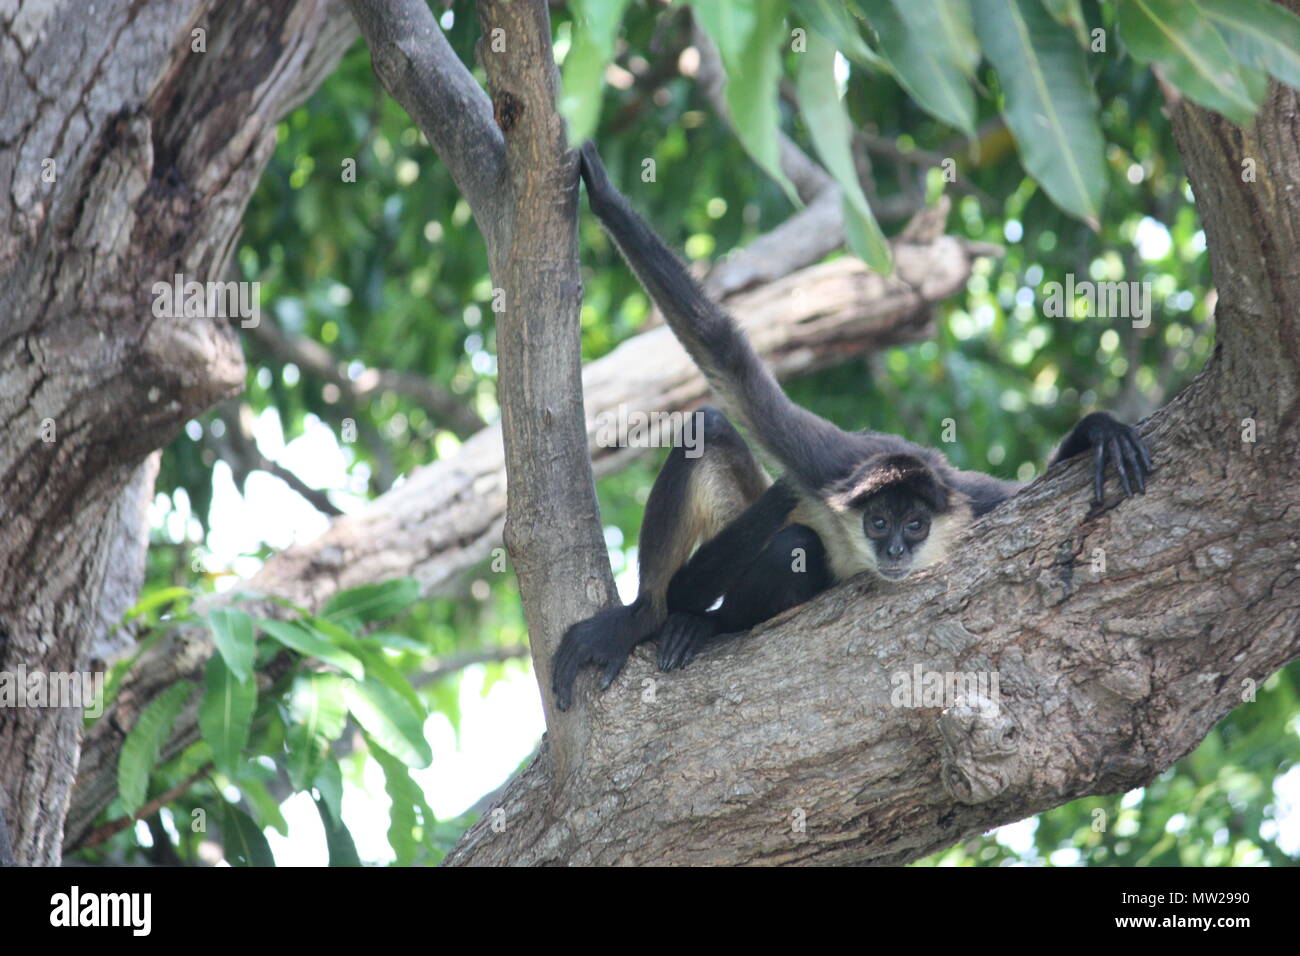 Monkey sitting in the tree Stock Photo